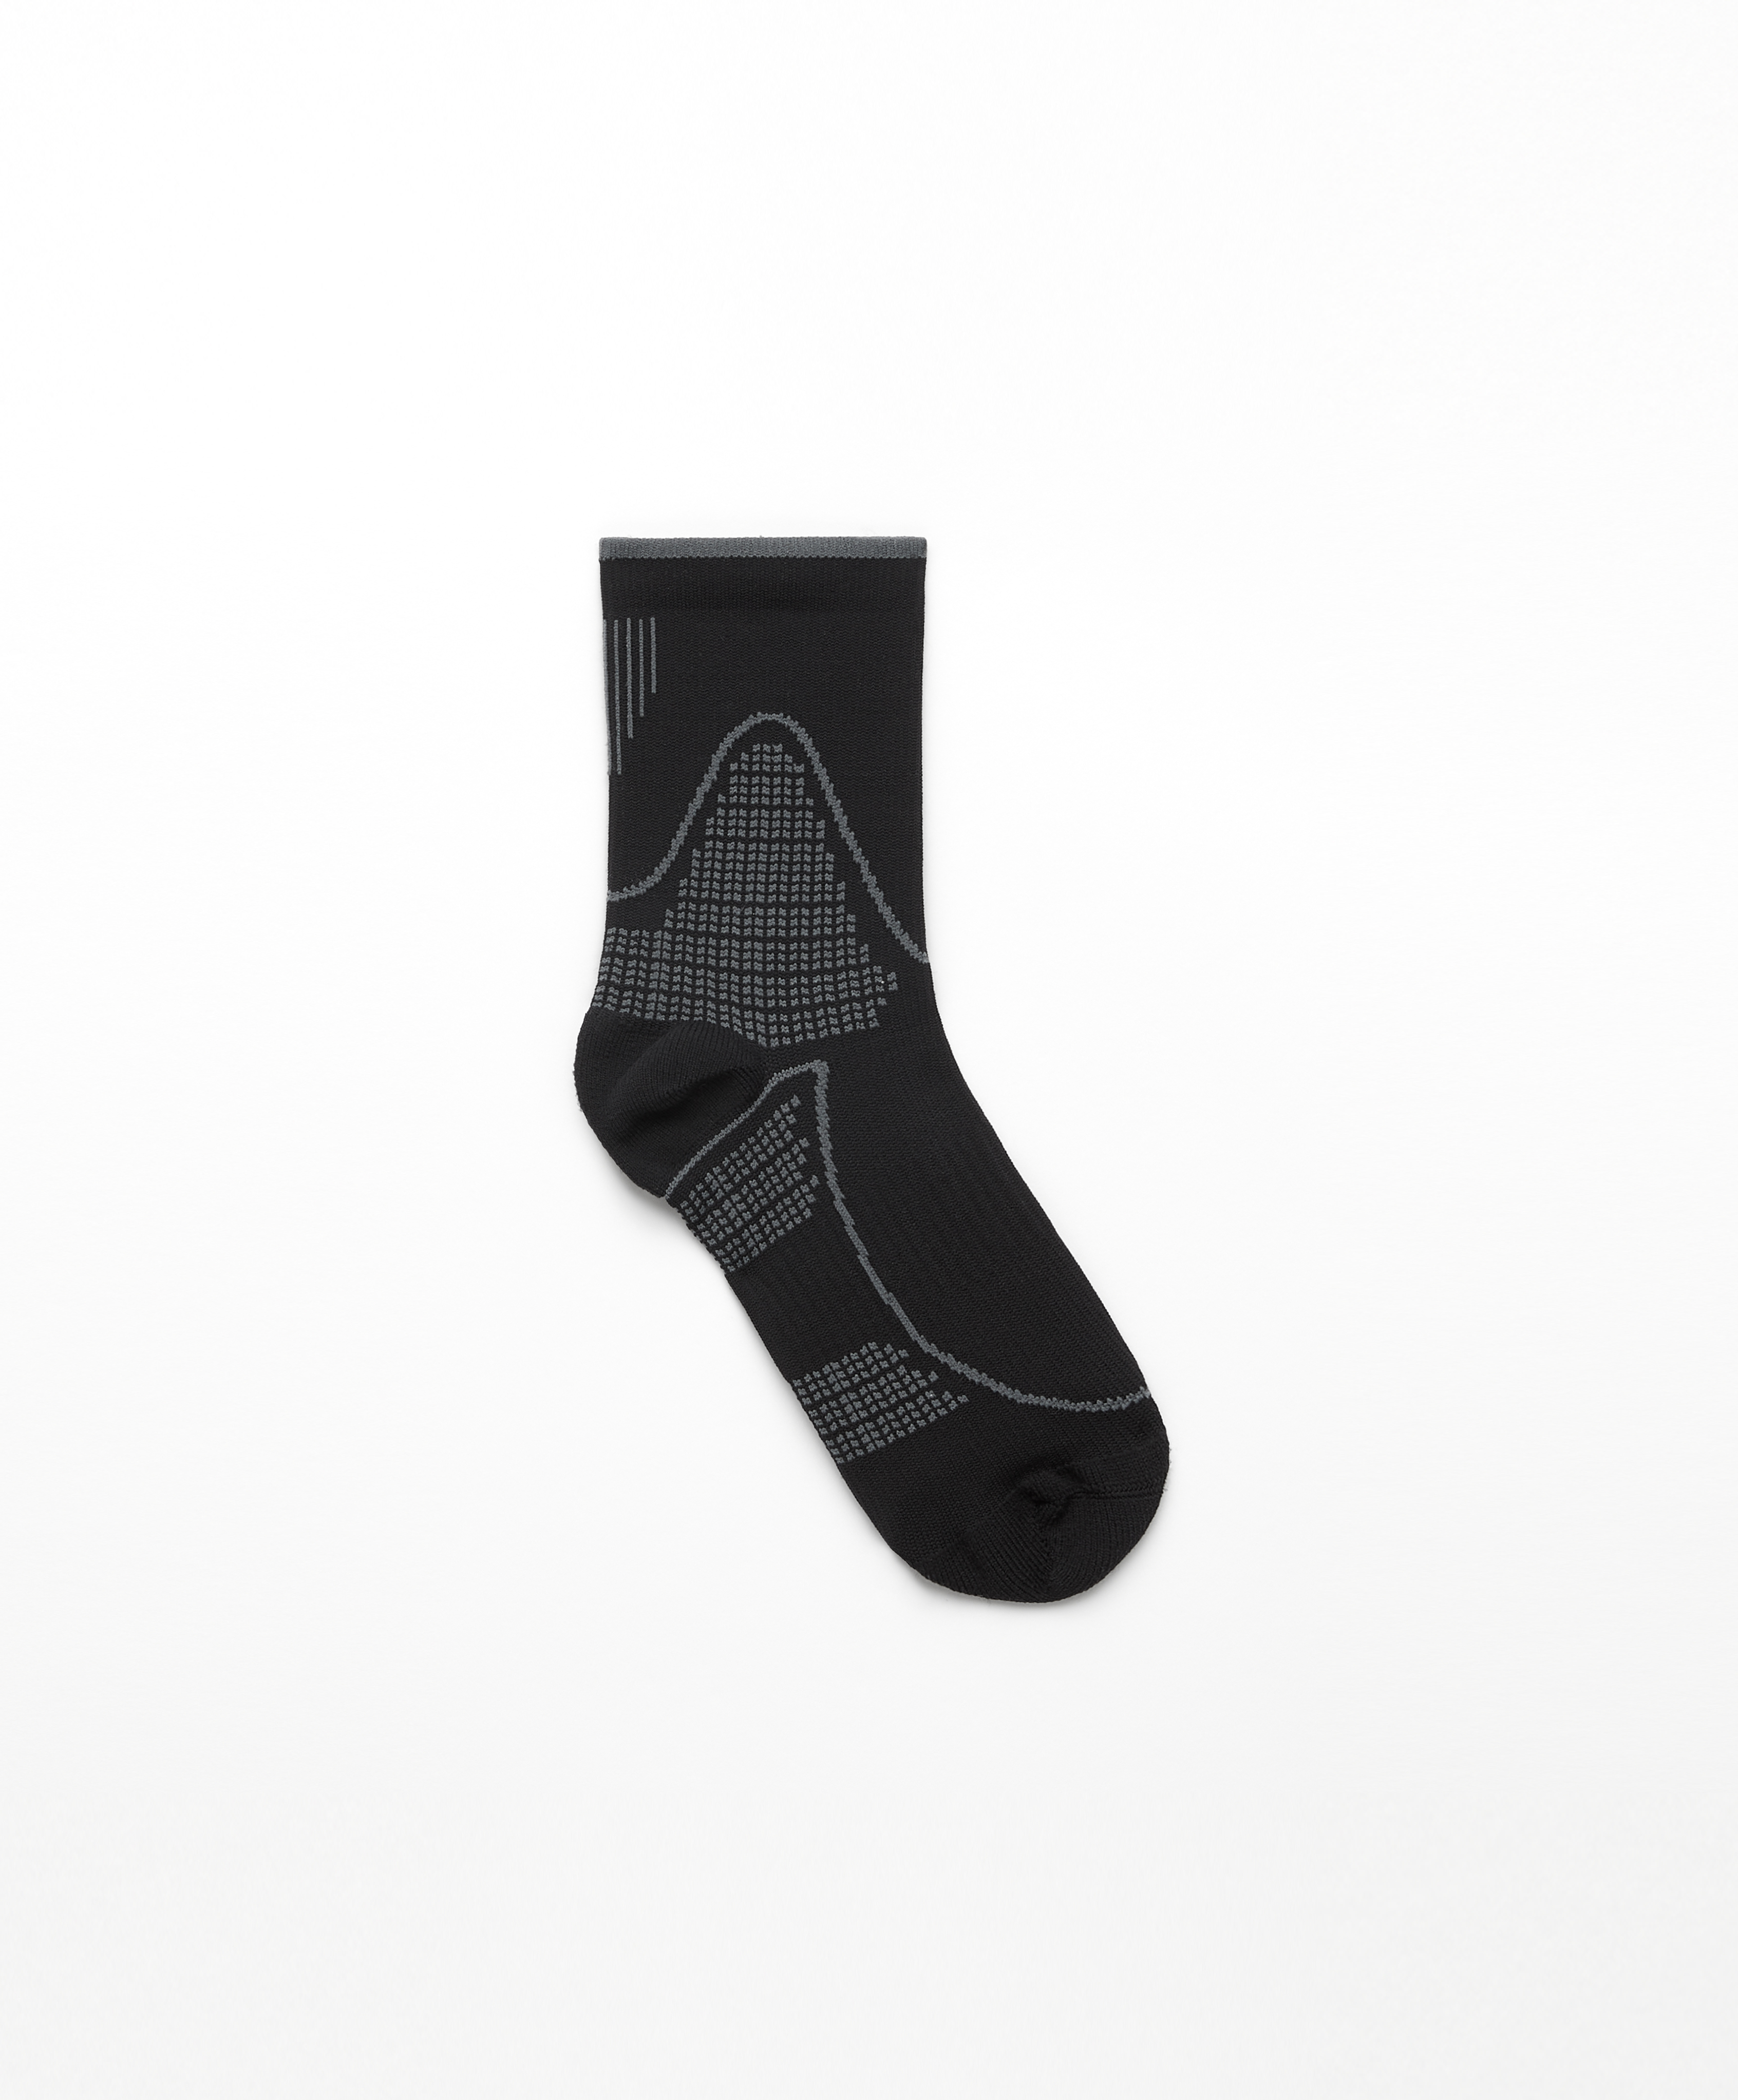 Microfibre blend classic hiking socks